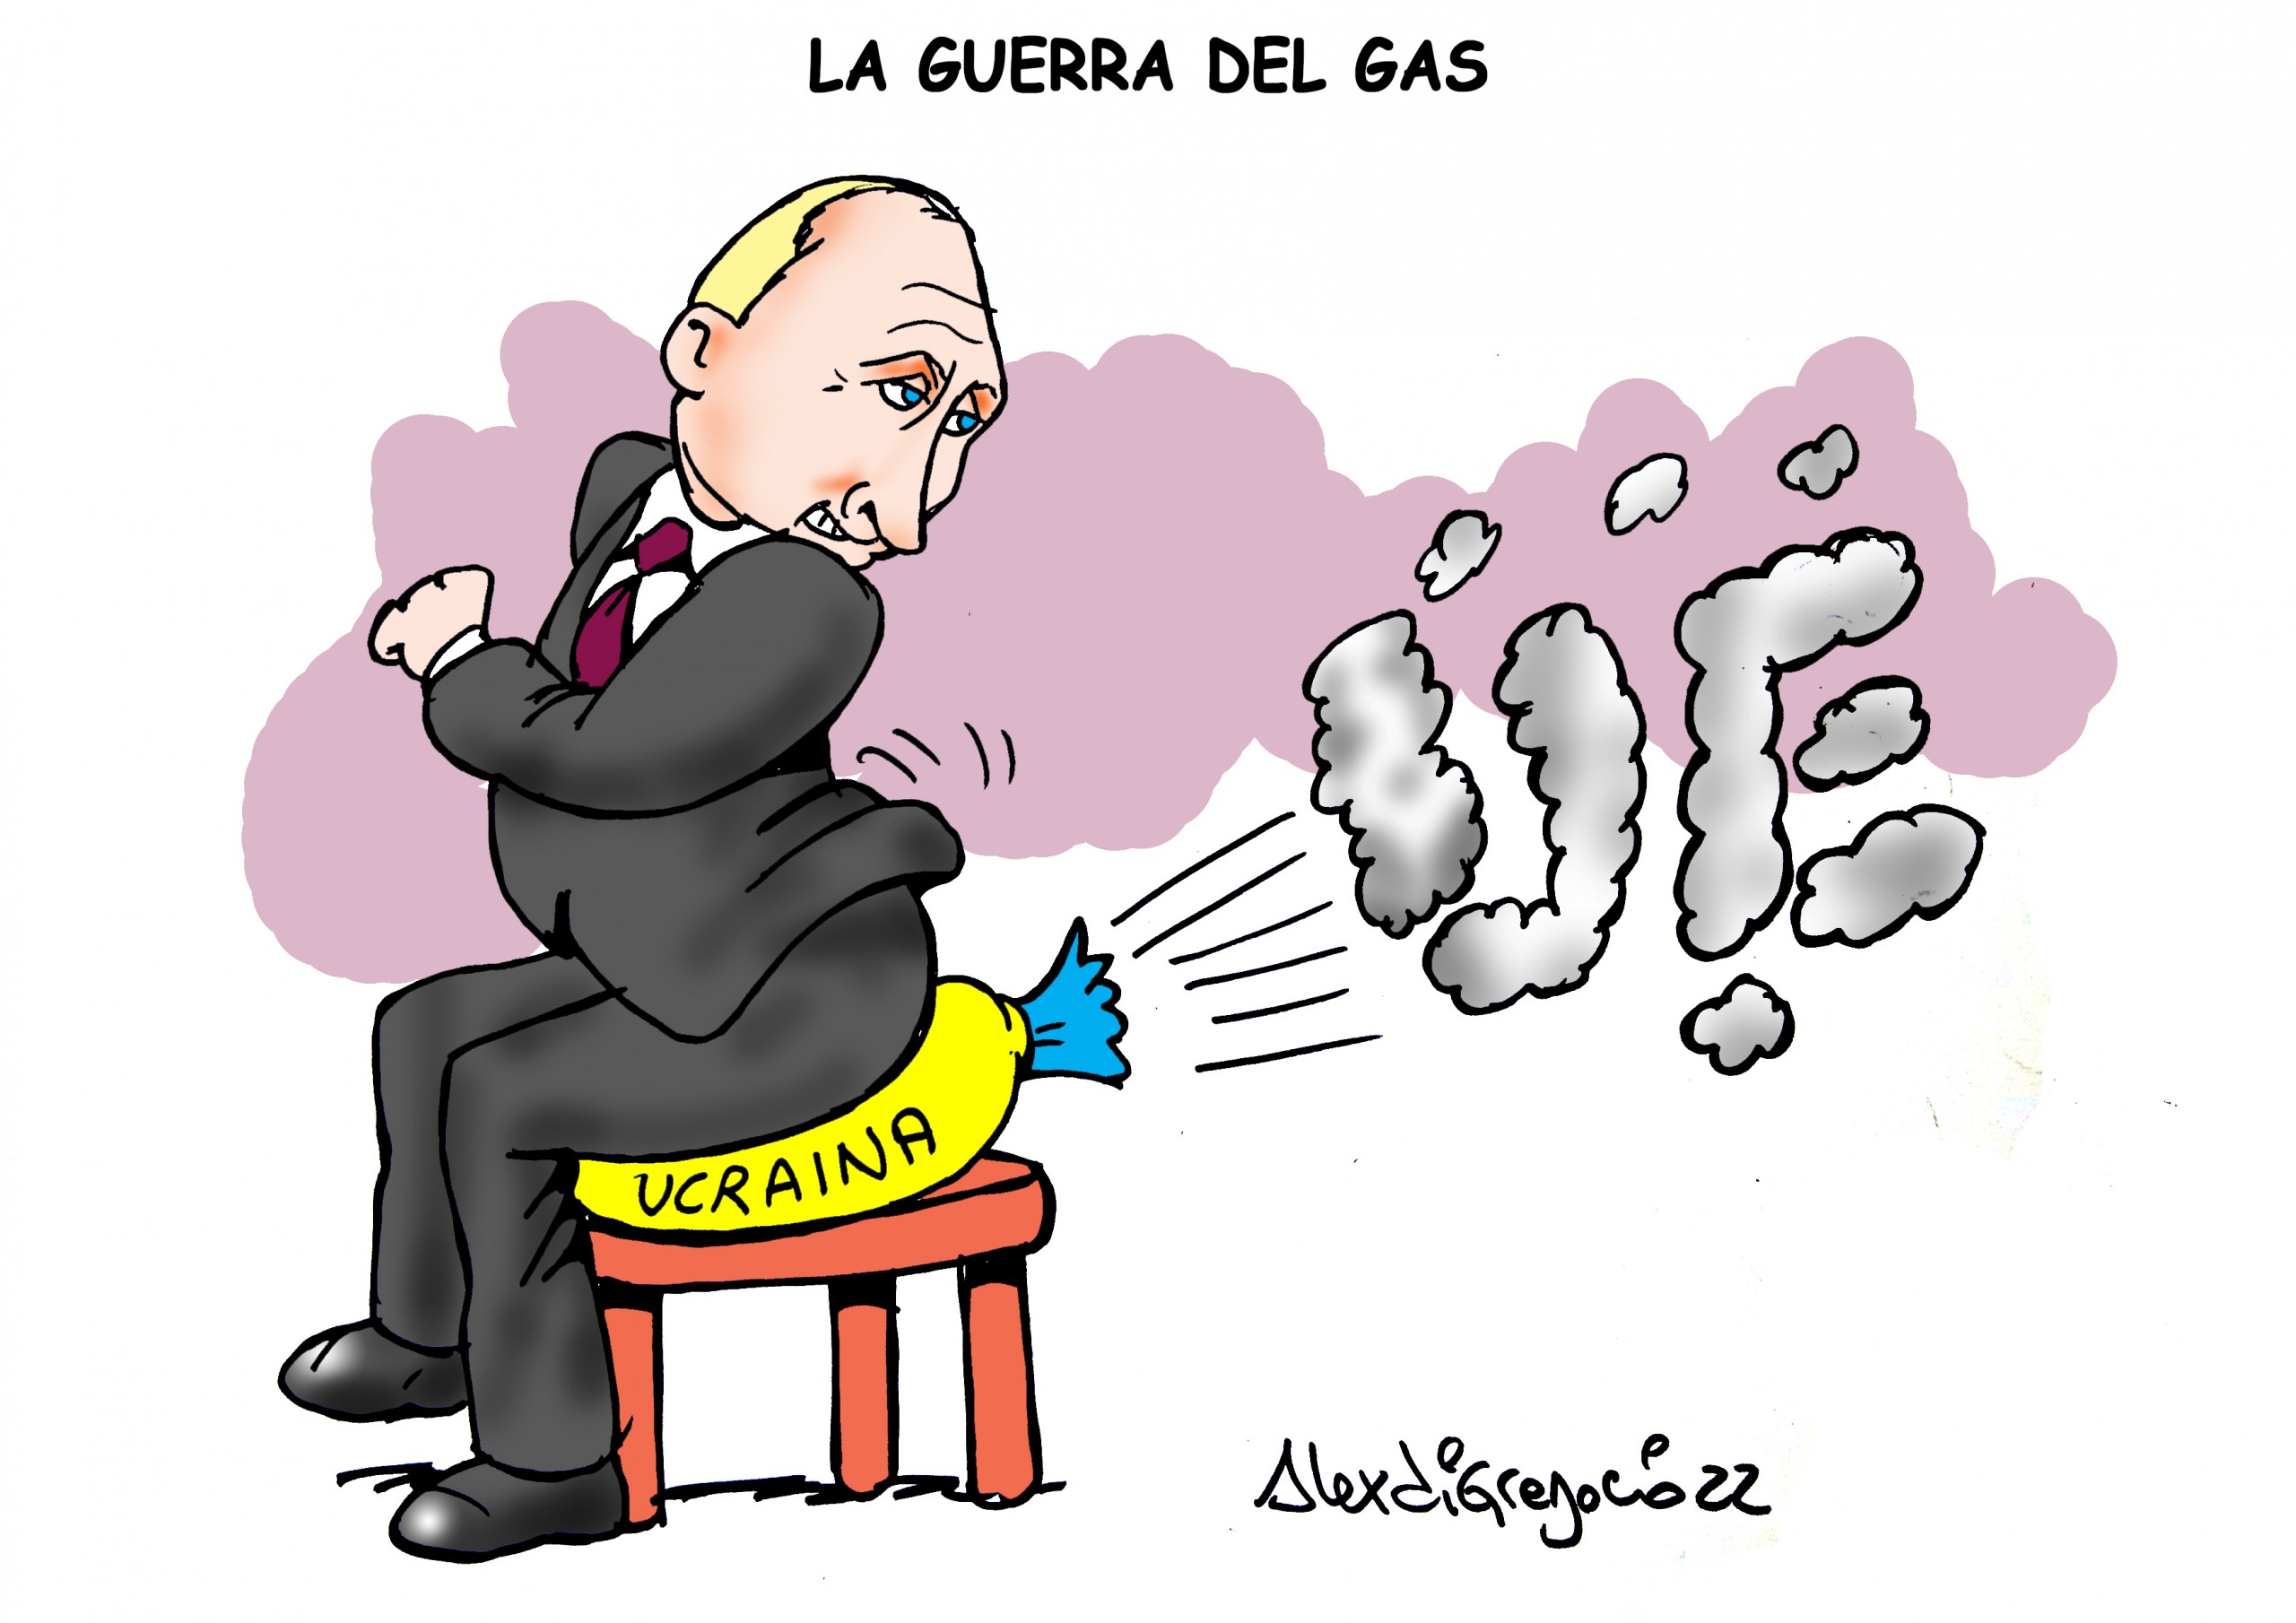 La Guerra del gas